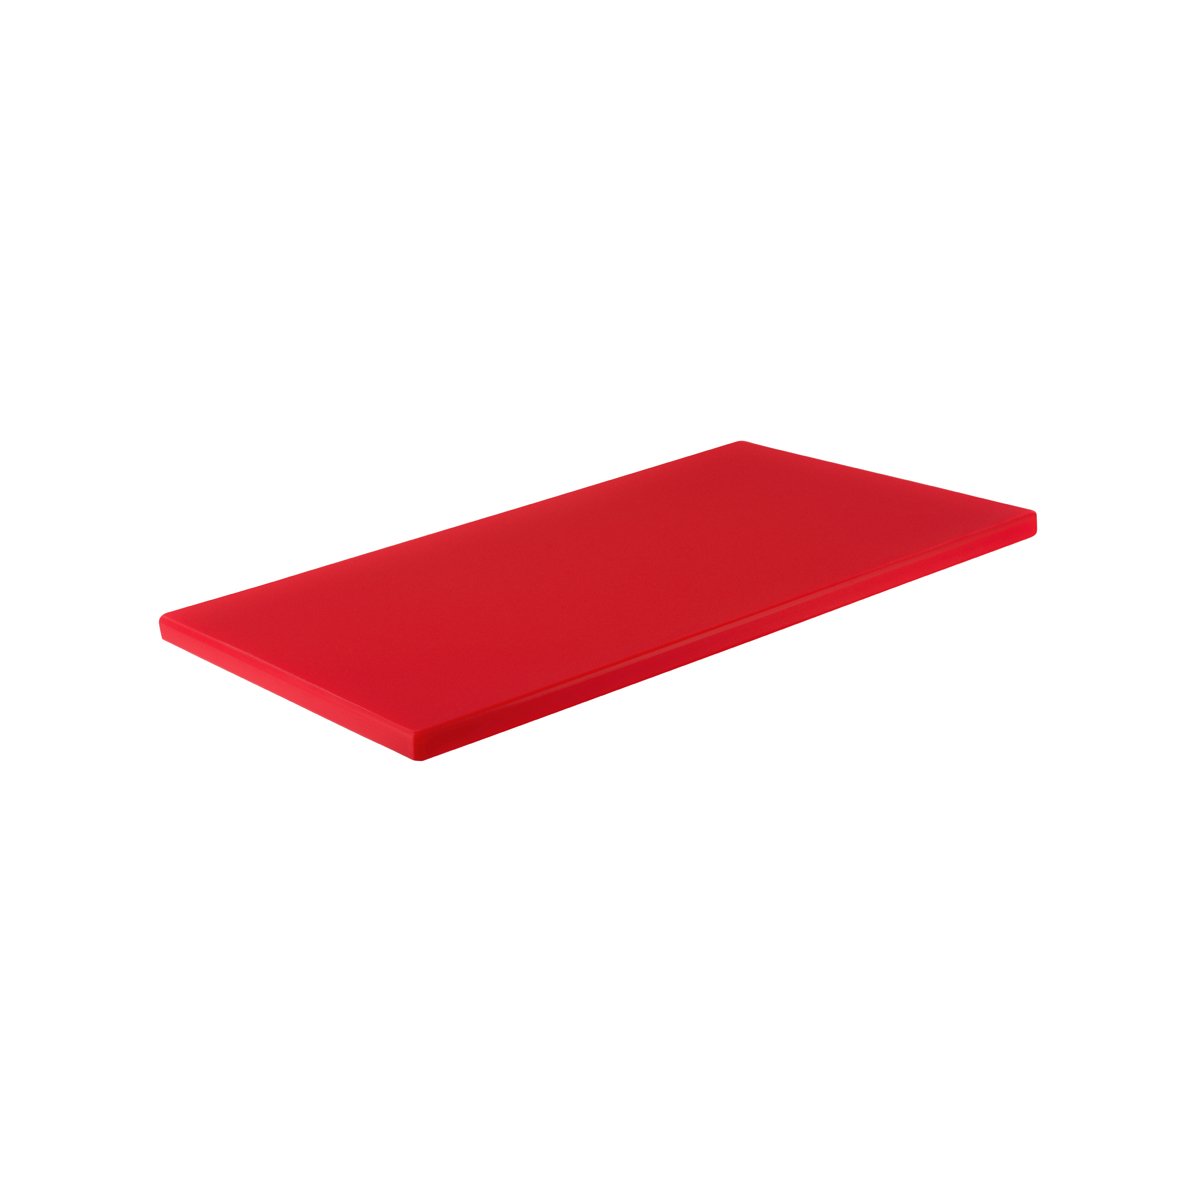 04353 Chef Inox Cutting Board Polyethylene Red 380x510x12mm Tomkin Australia Hospitality Supplies